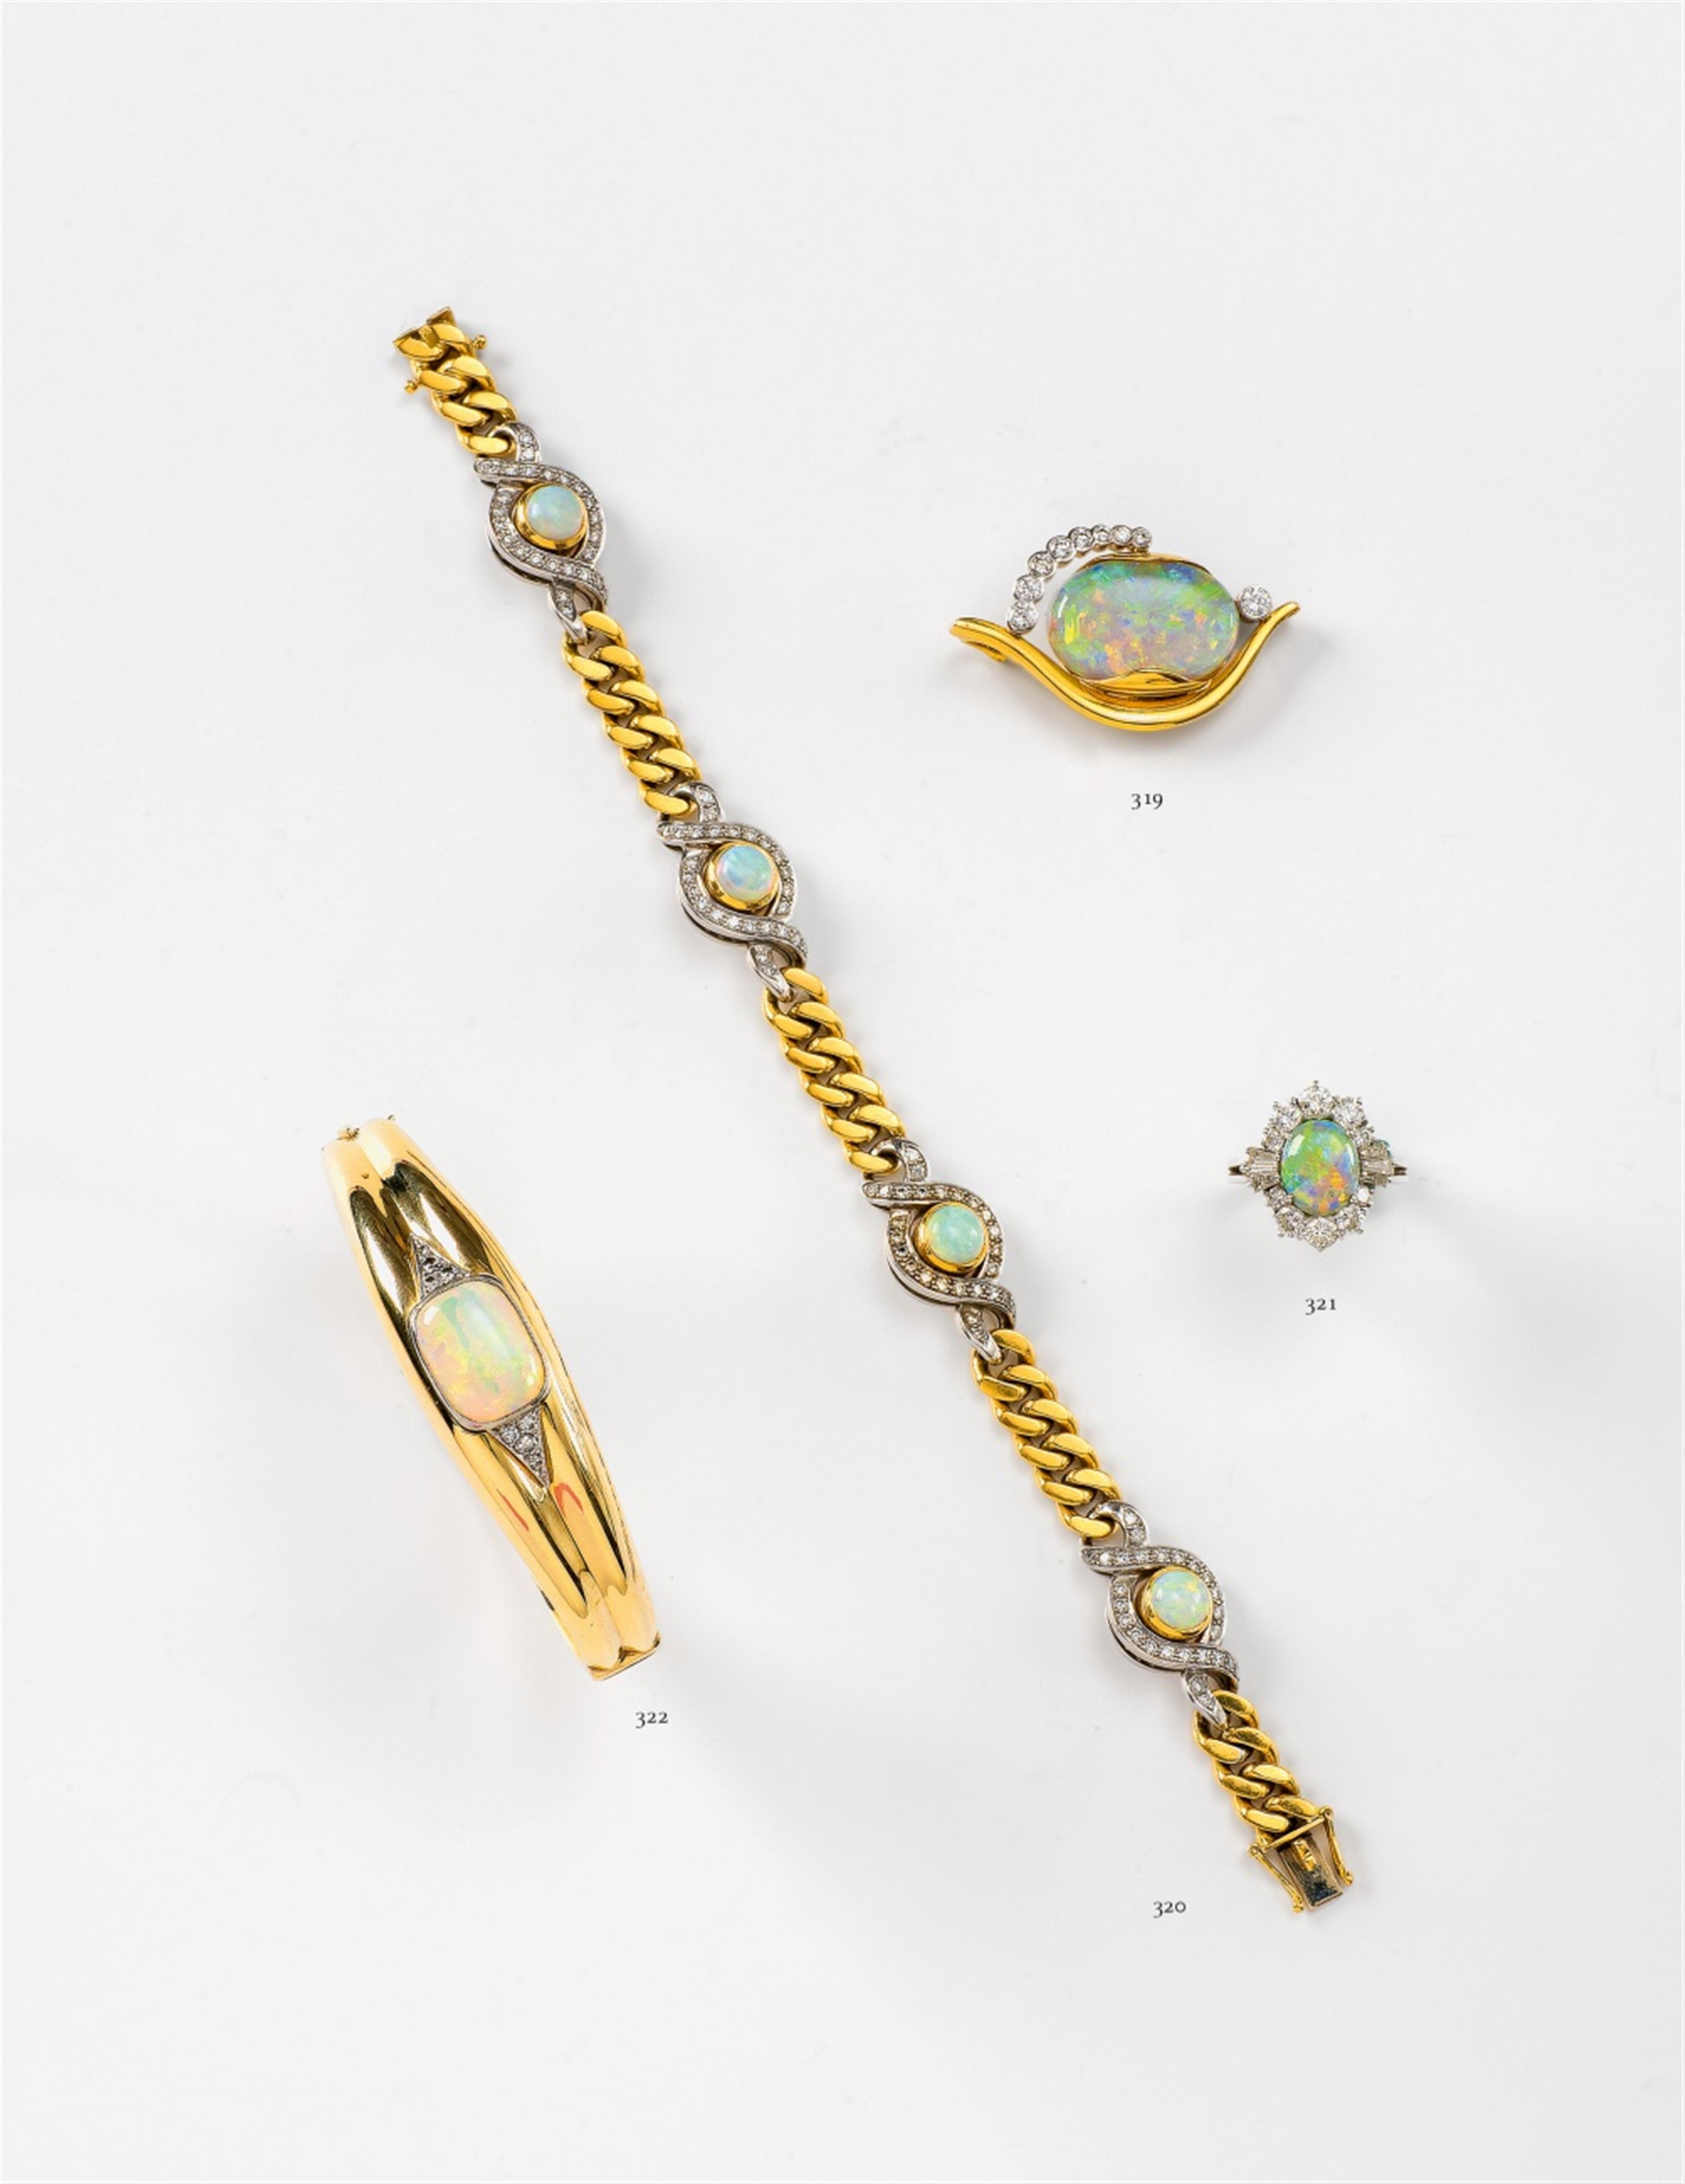 An 18k gold and opal bracelet - image-1